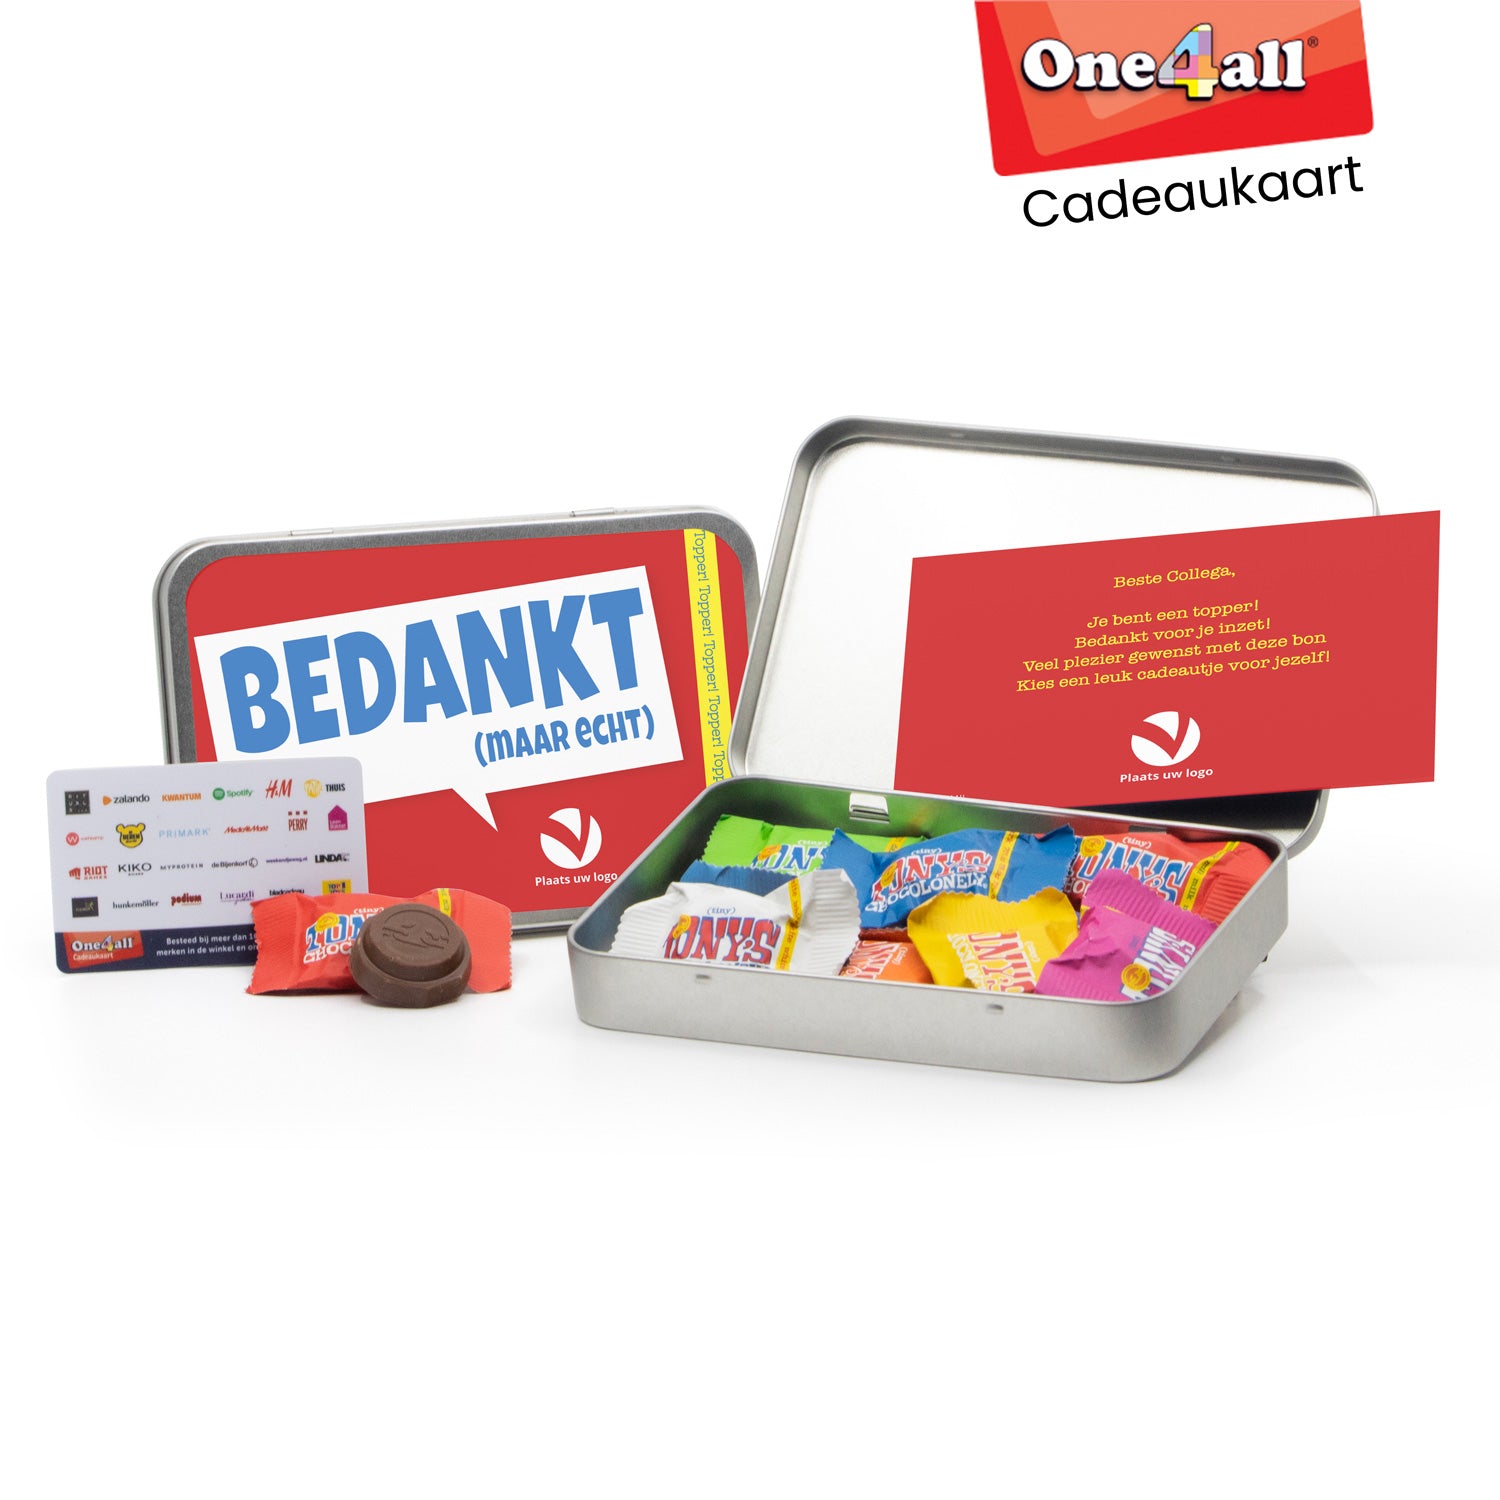 Tiny Tony's in blik met One4All cadeaukaart - Zakelijk - Bedankjes.nl